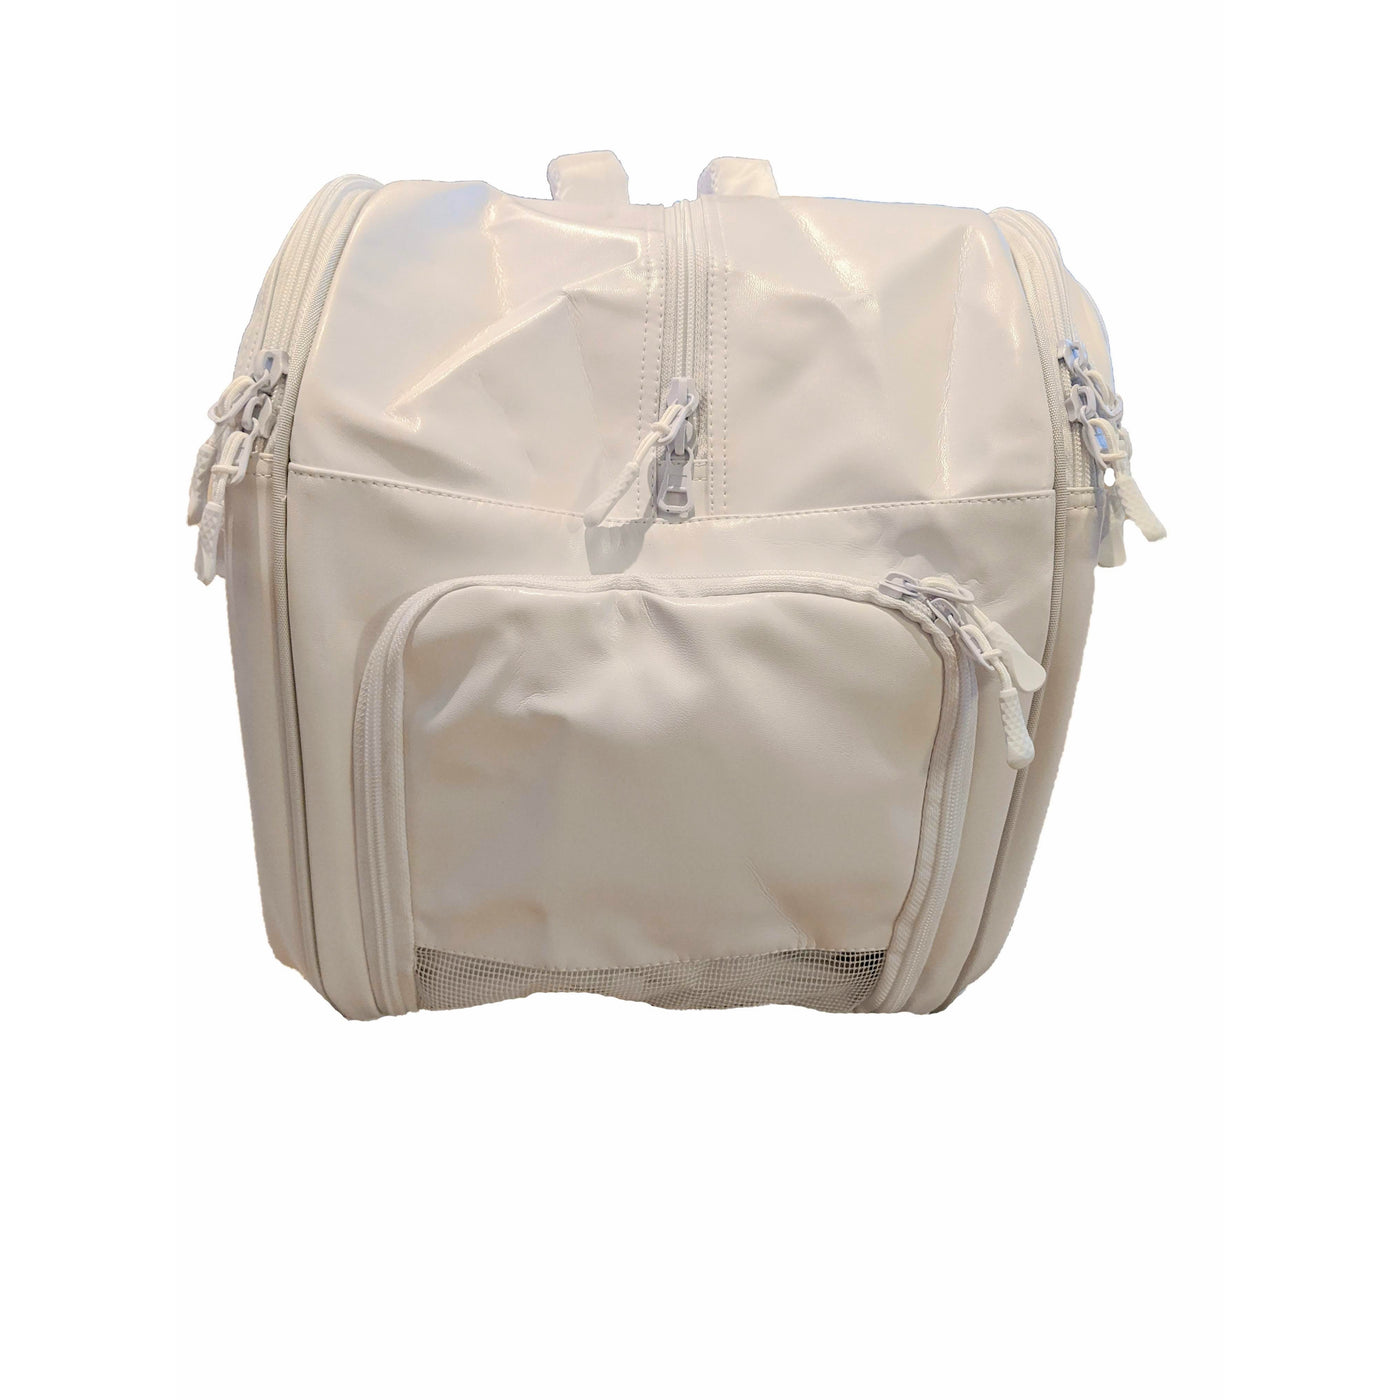 Xenon Paddle Tennis carry bag white large extra storage